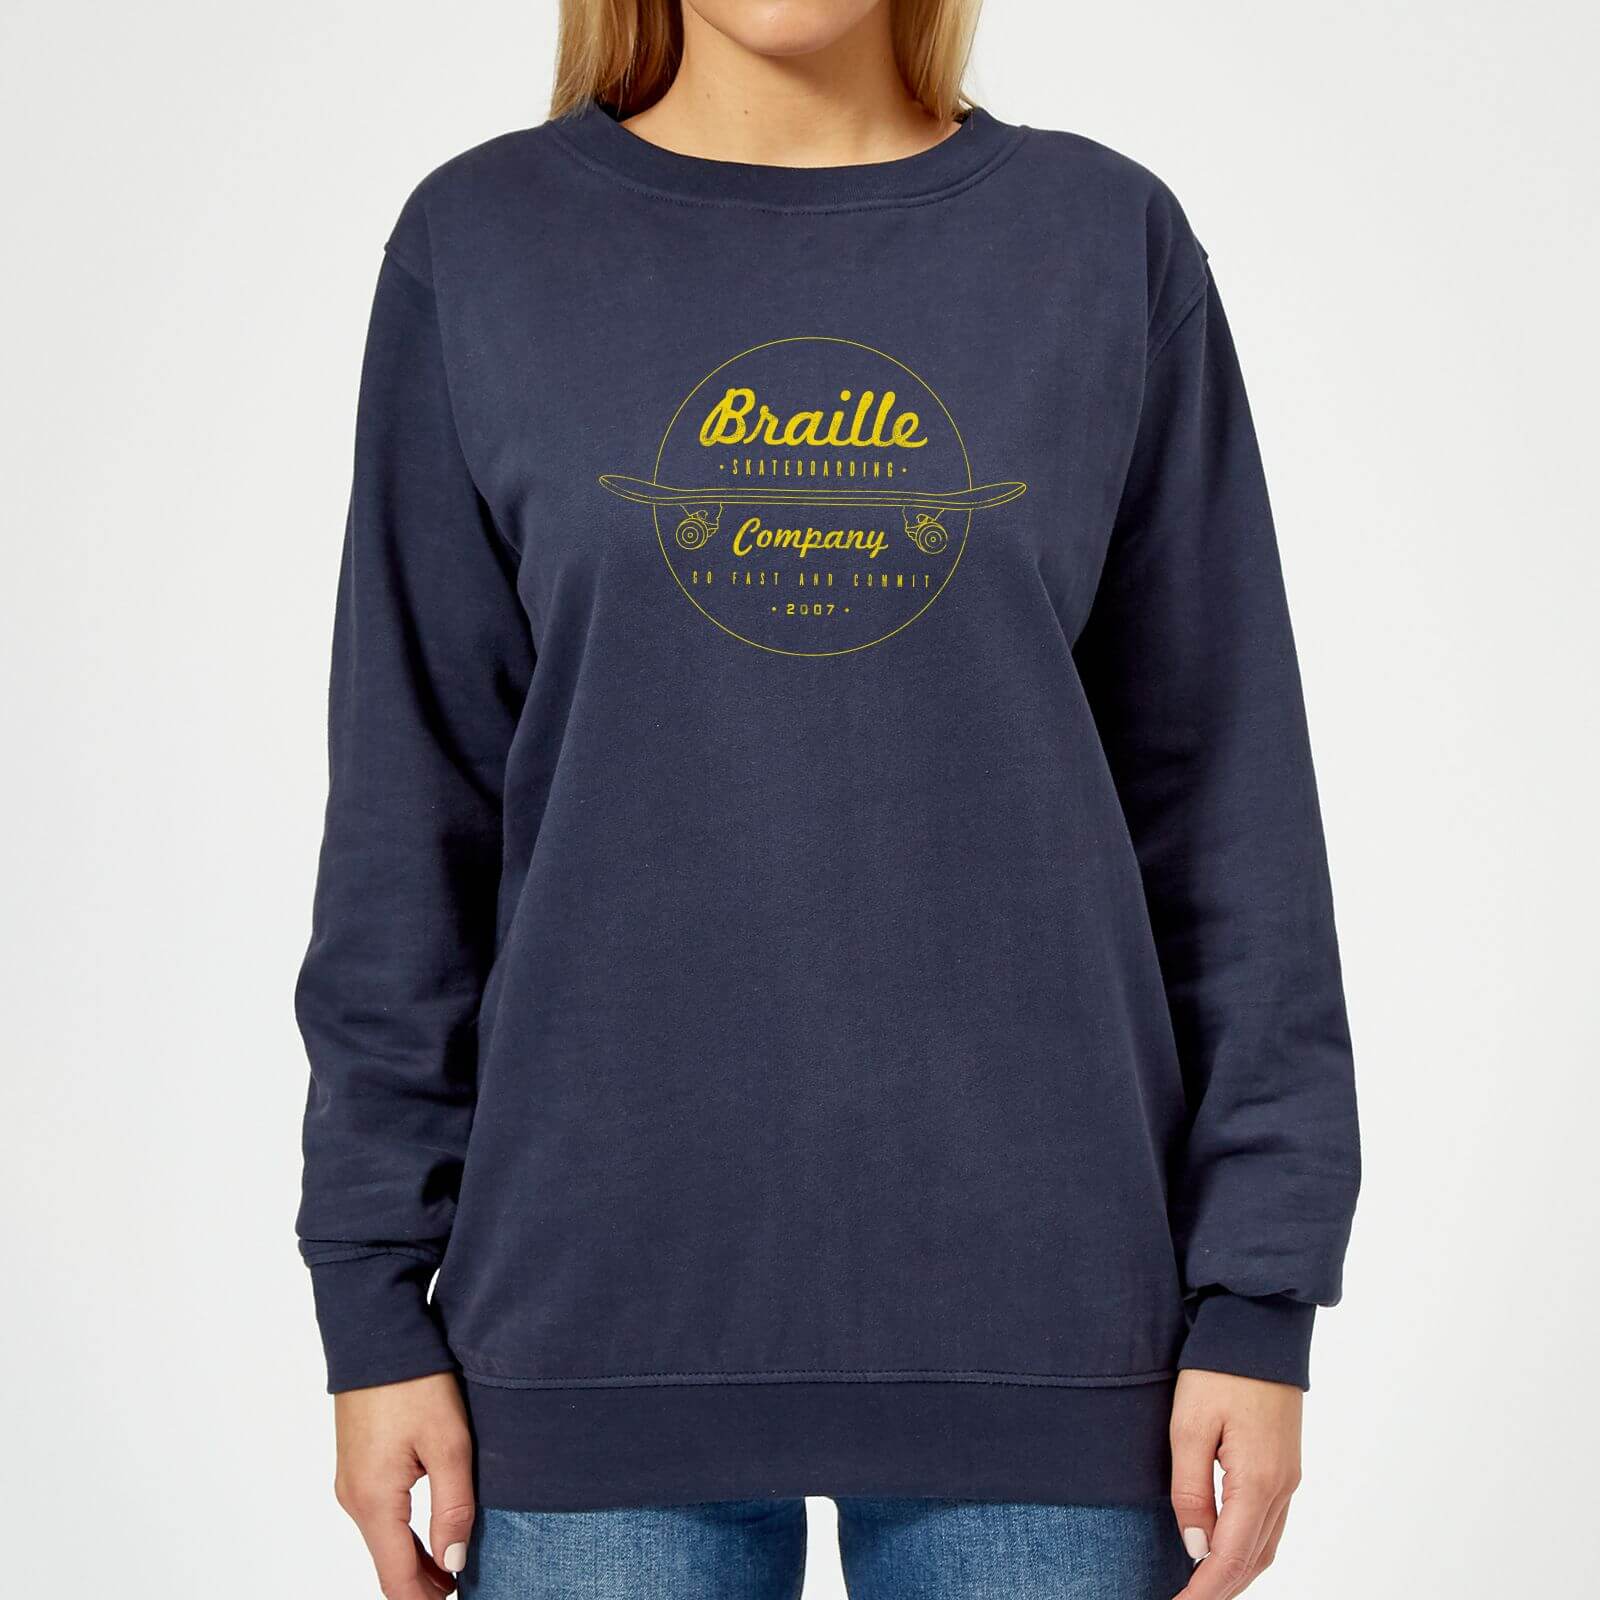 Limited Edition Braille Skate Company Women's Sweatshirt - Navy - S - azul marino